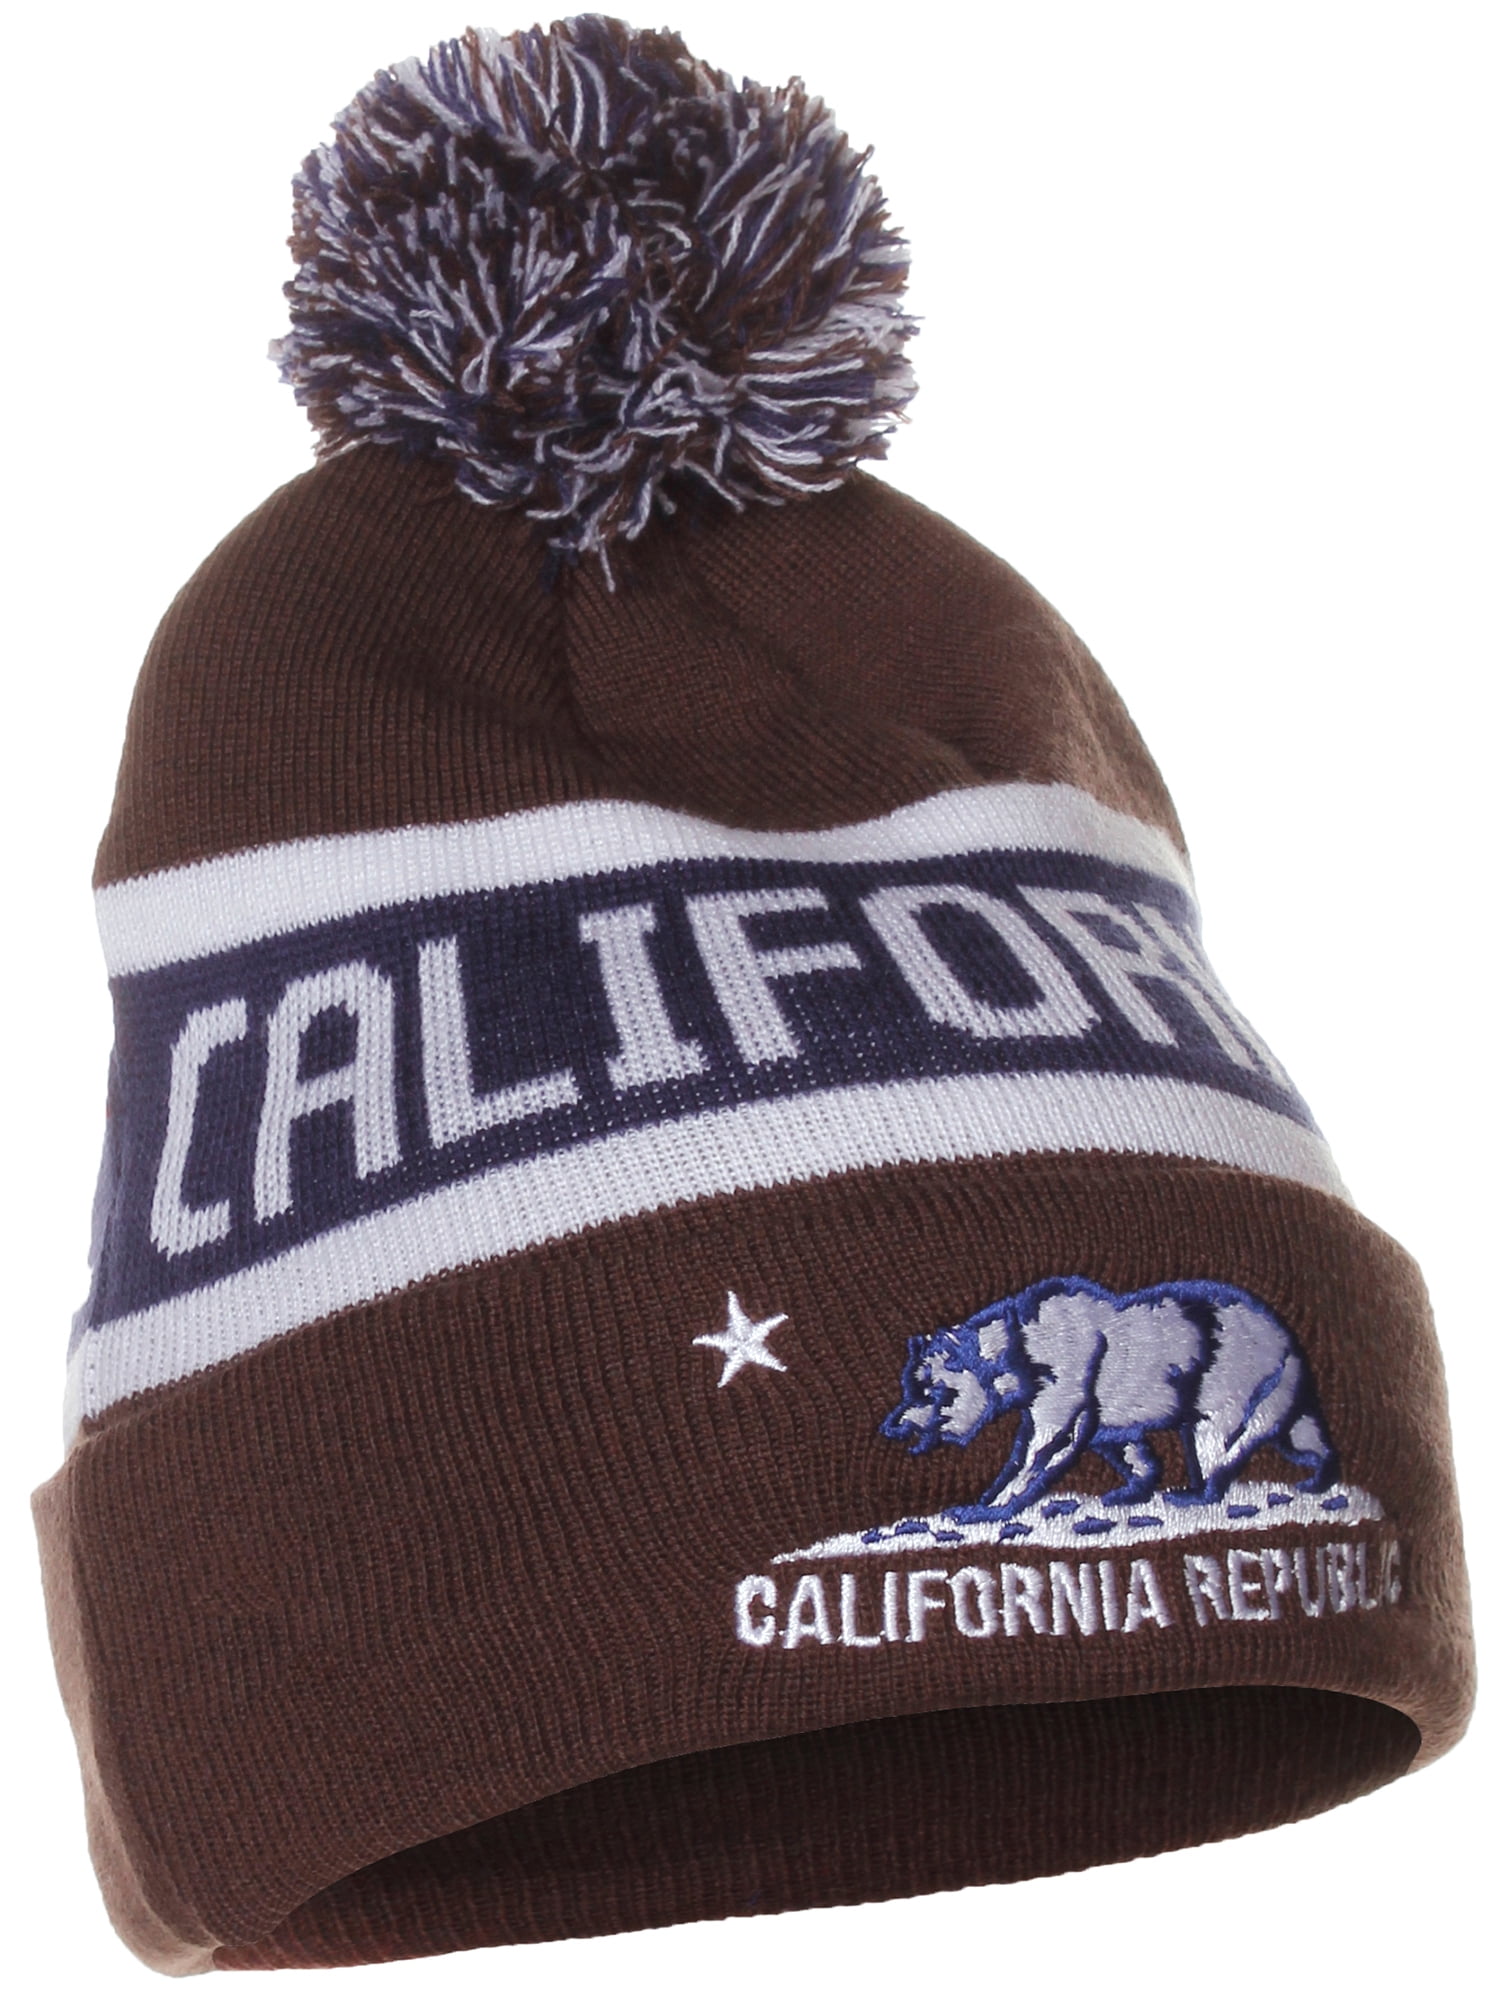 American Cities Unisex California Bear Cuff Pom Pom Beanie Knit Hat Cap Brown Blue - Walmart.com